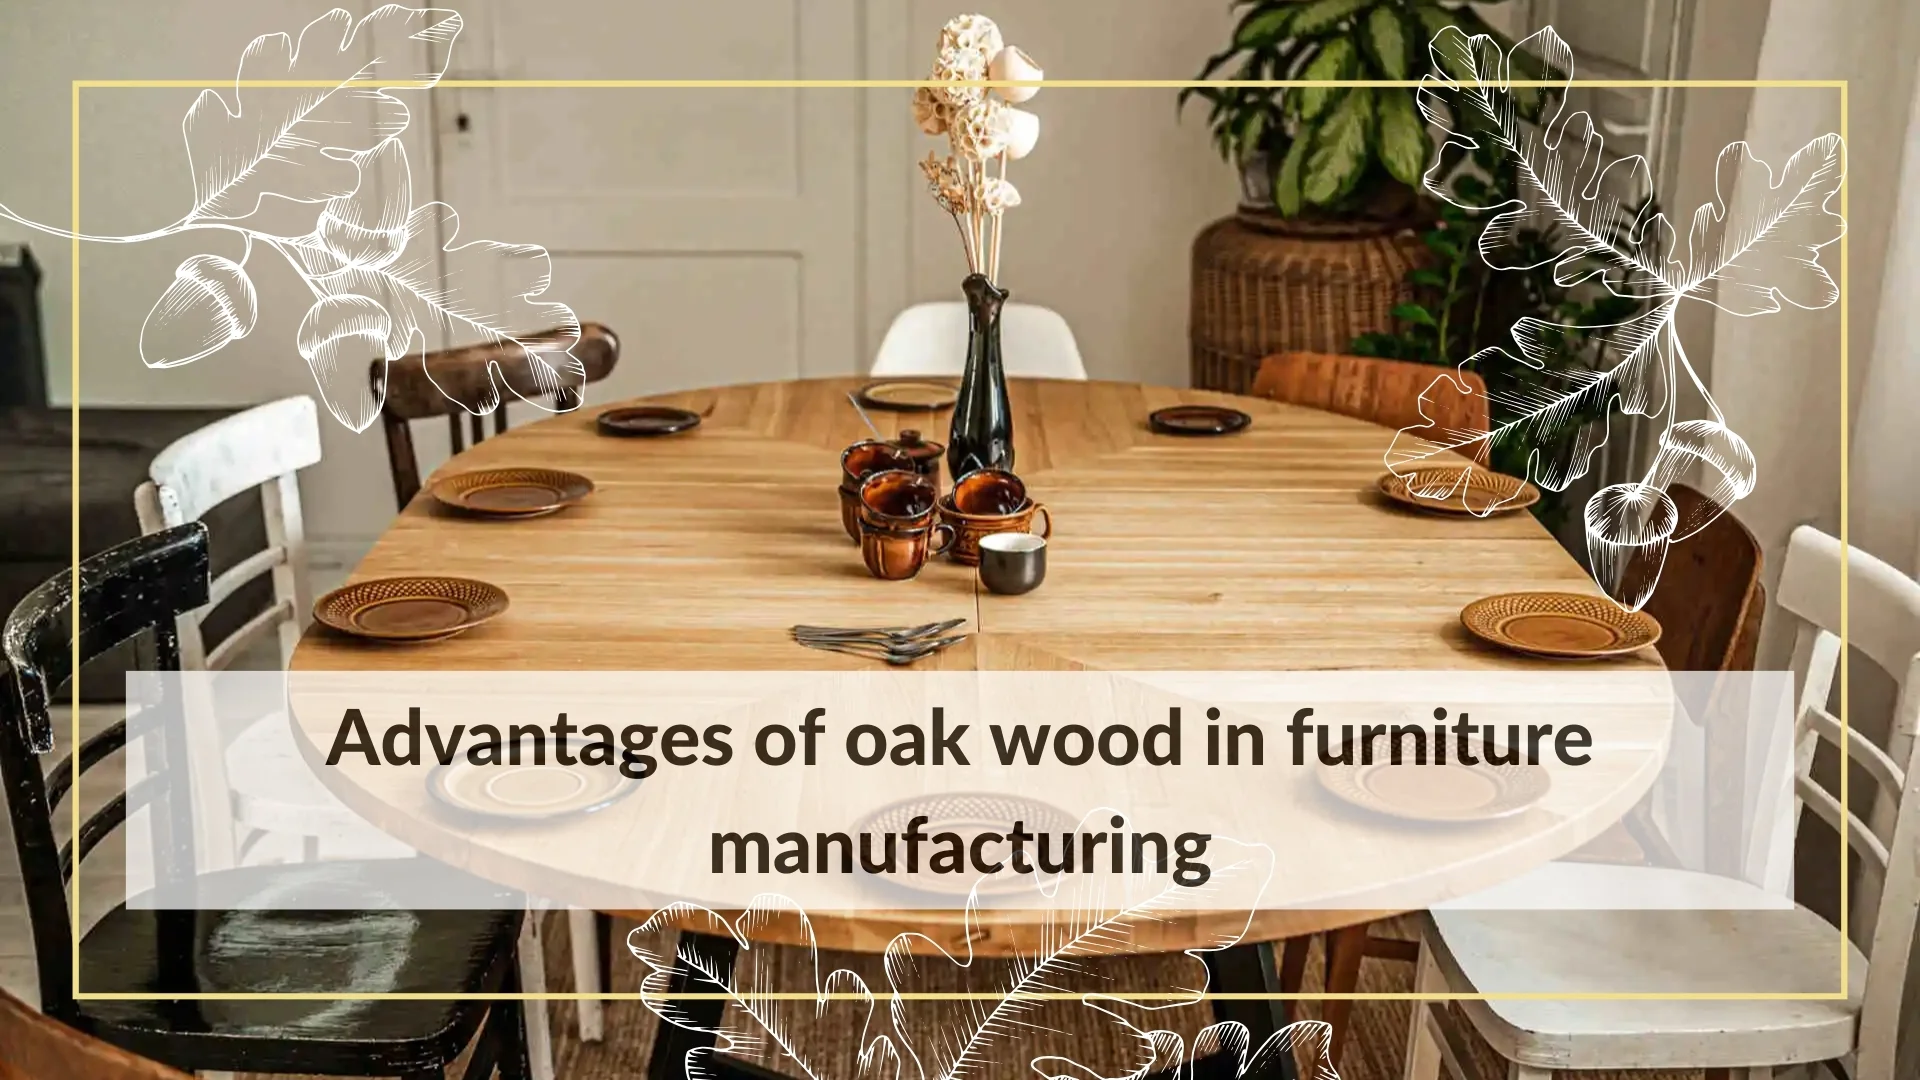 Advantages of oak wood in furniture manufacturing - banner